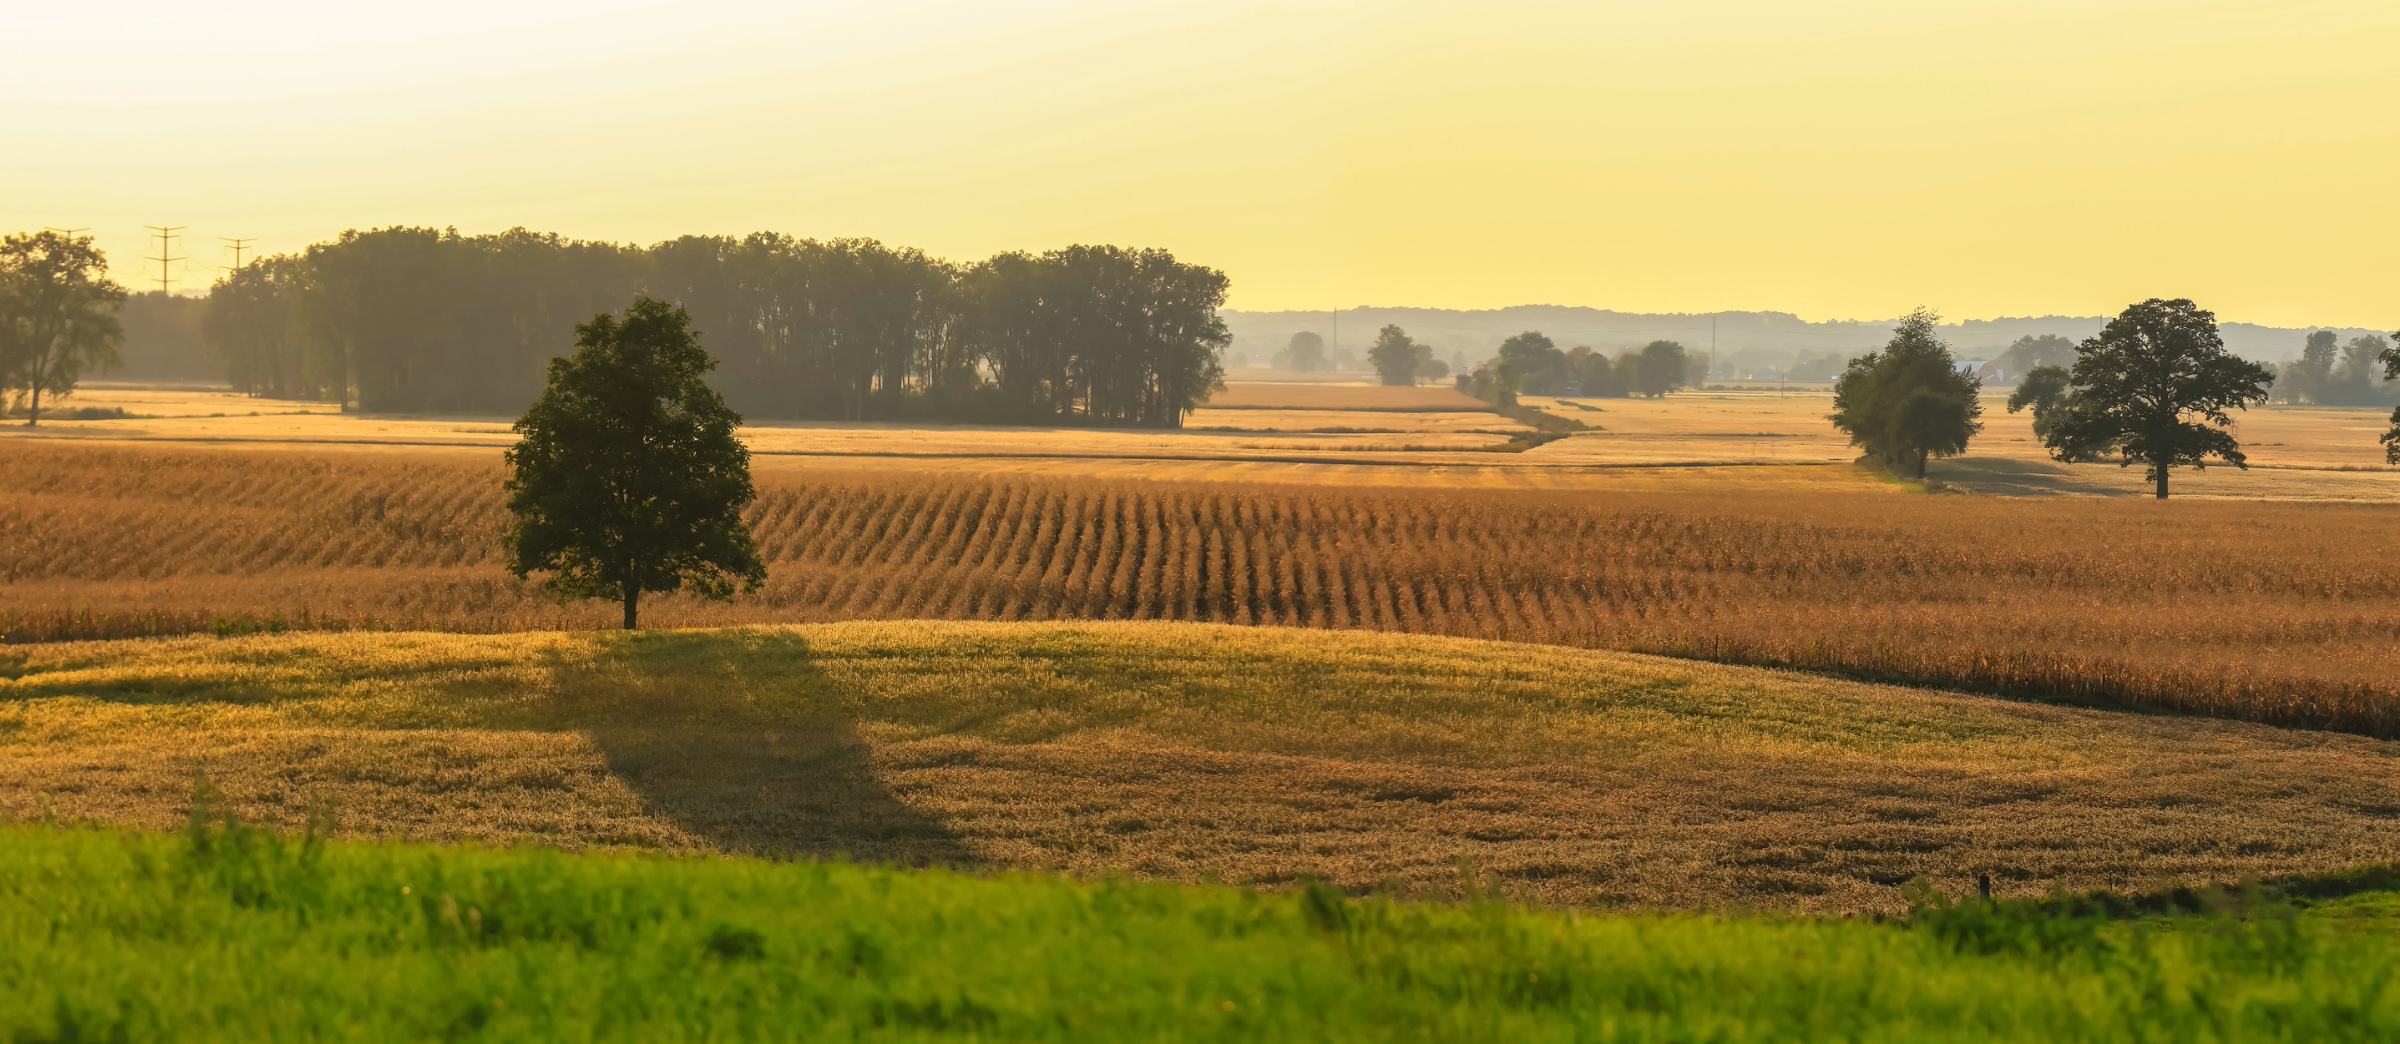 Landscape scene of a corn field in the fall